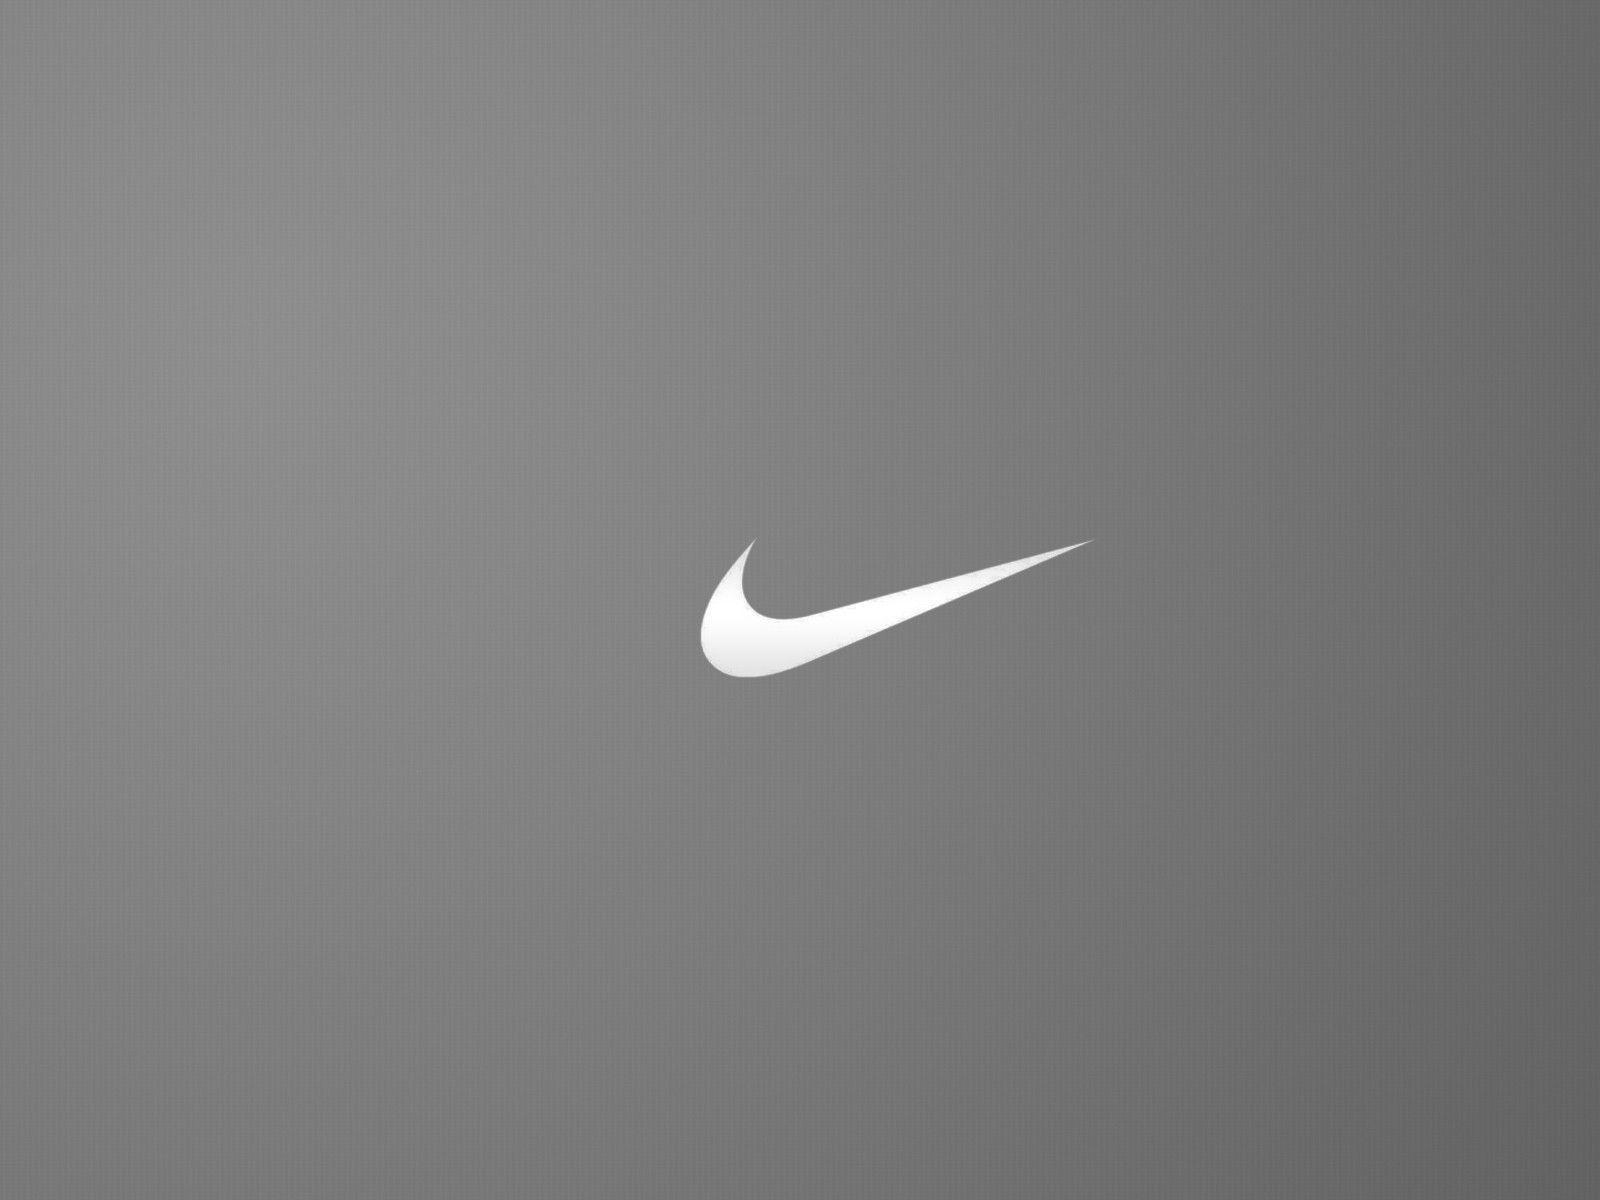 Nike Wallpaper Background